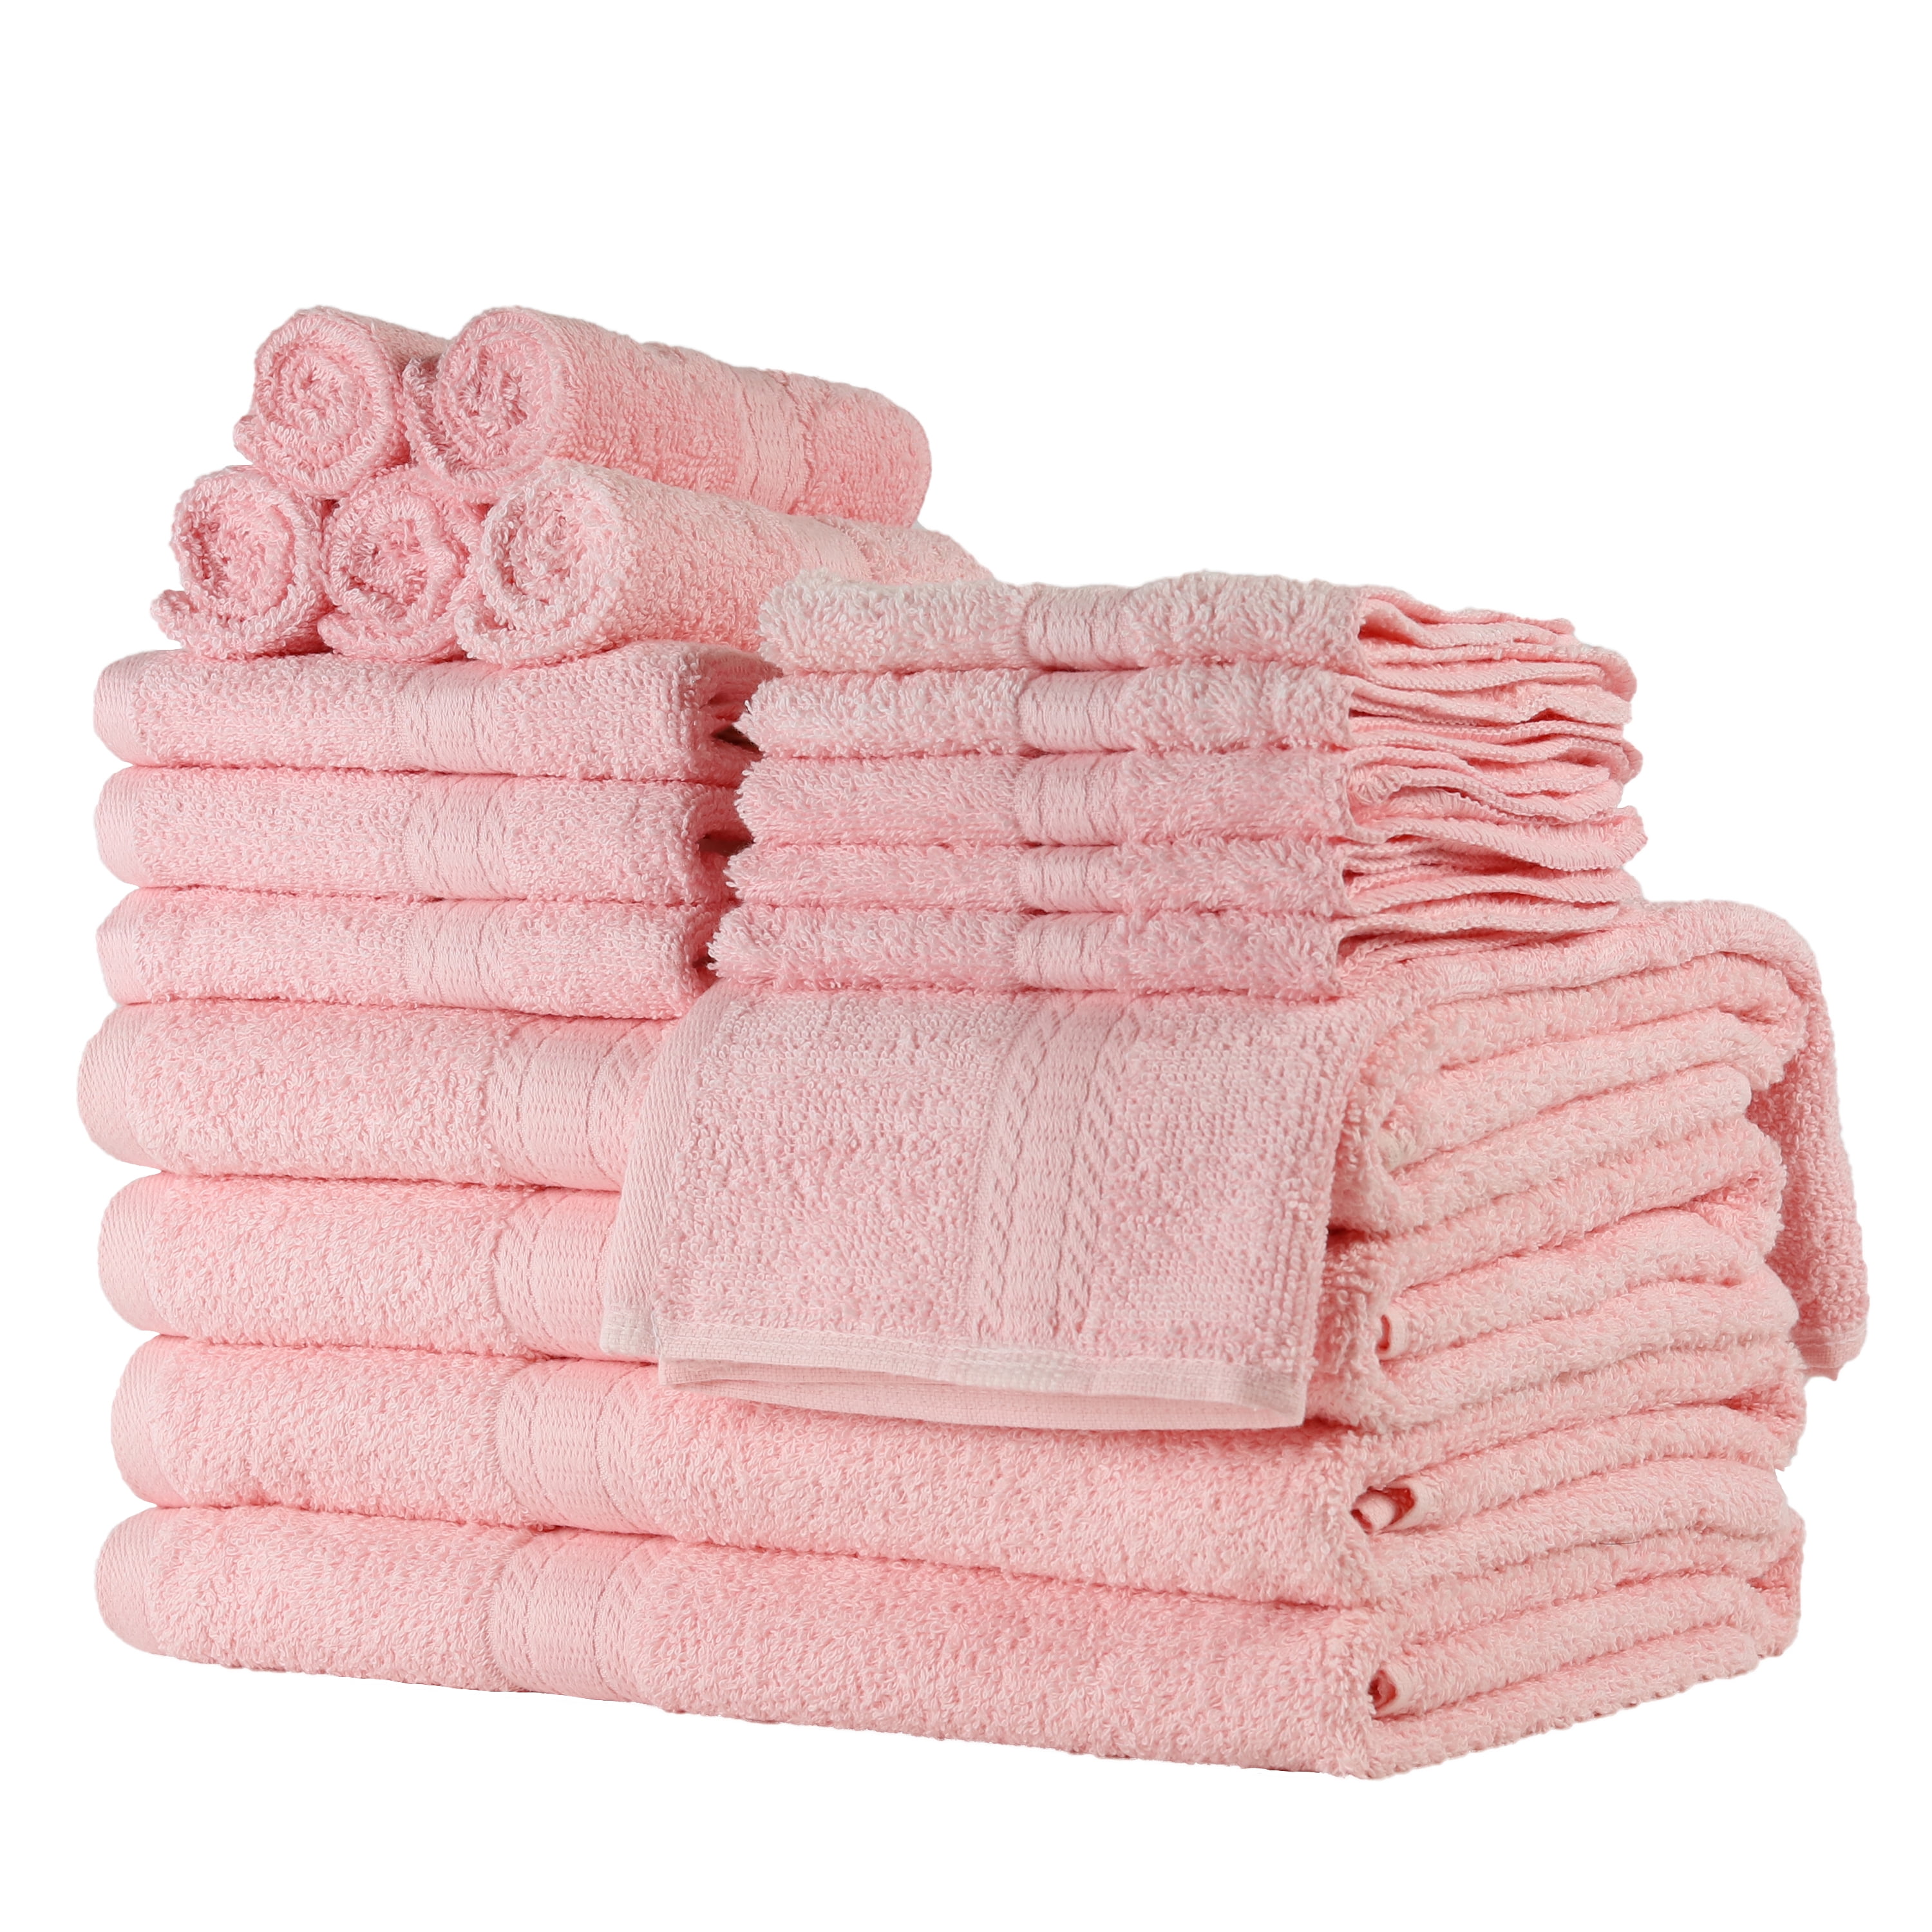 Bright Hot Pink Towel Set by Fieldcrest Vintage Bath Towel Vintage Pink  Towels Pink Fieldcrest Towels Set Hot Pink Towel Set 